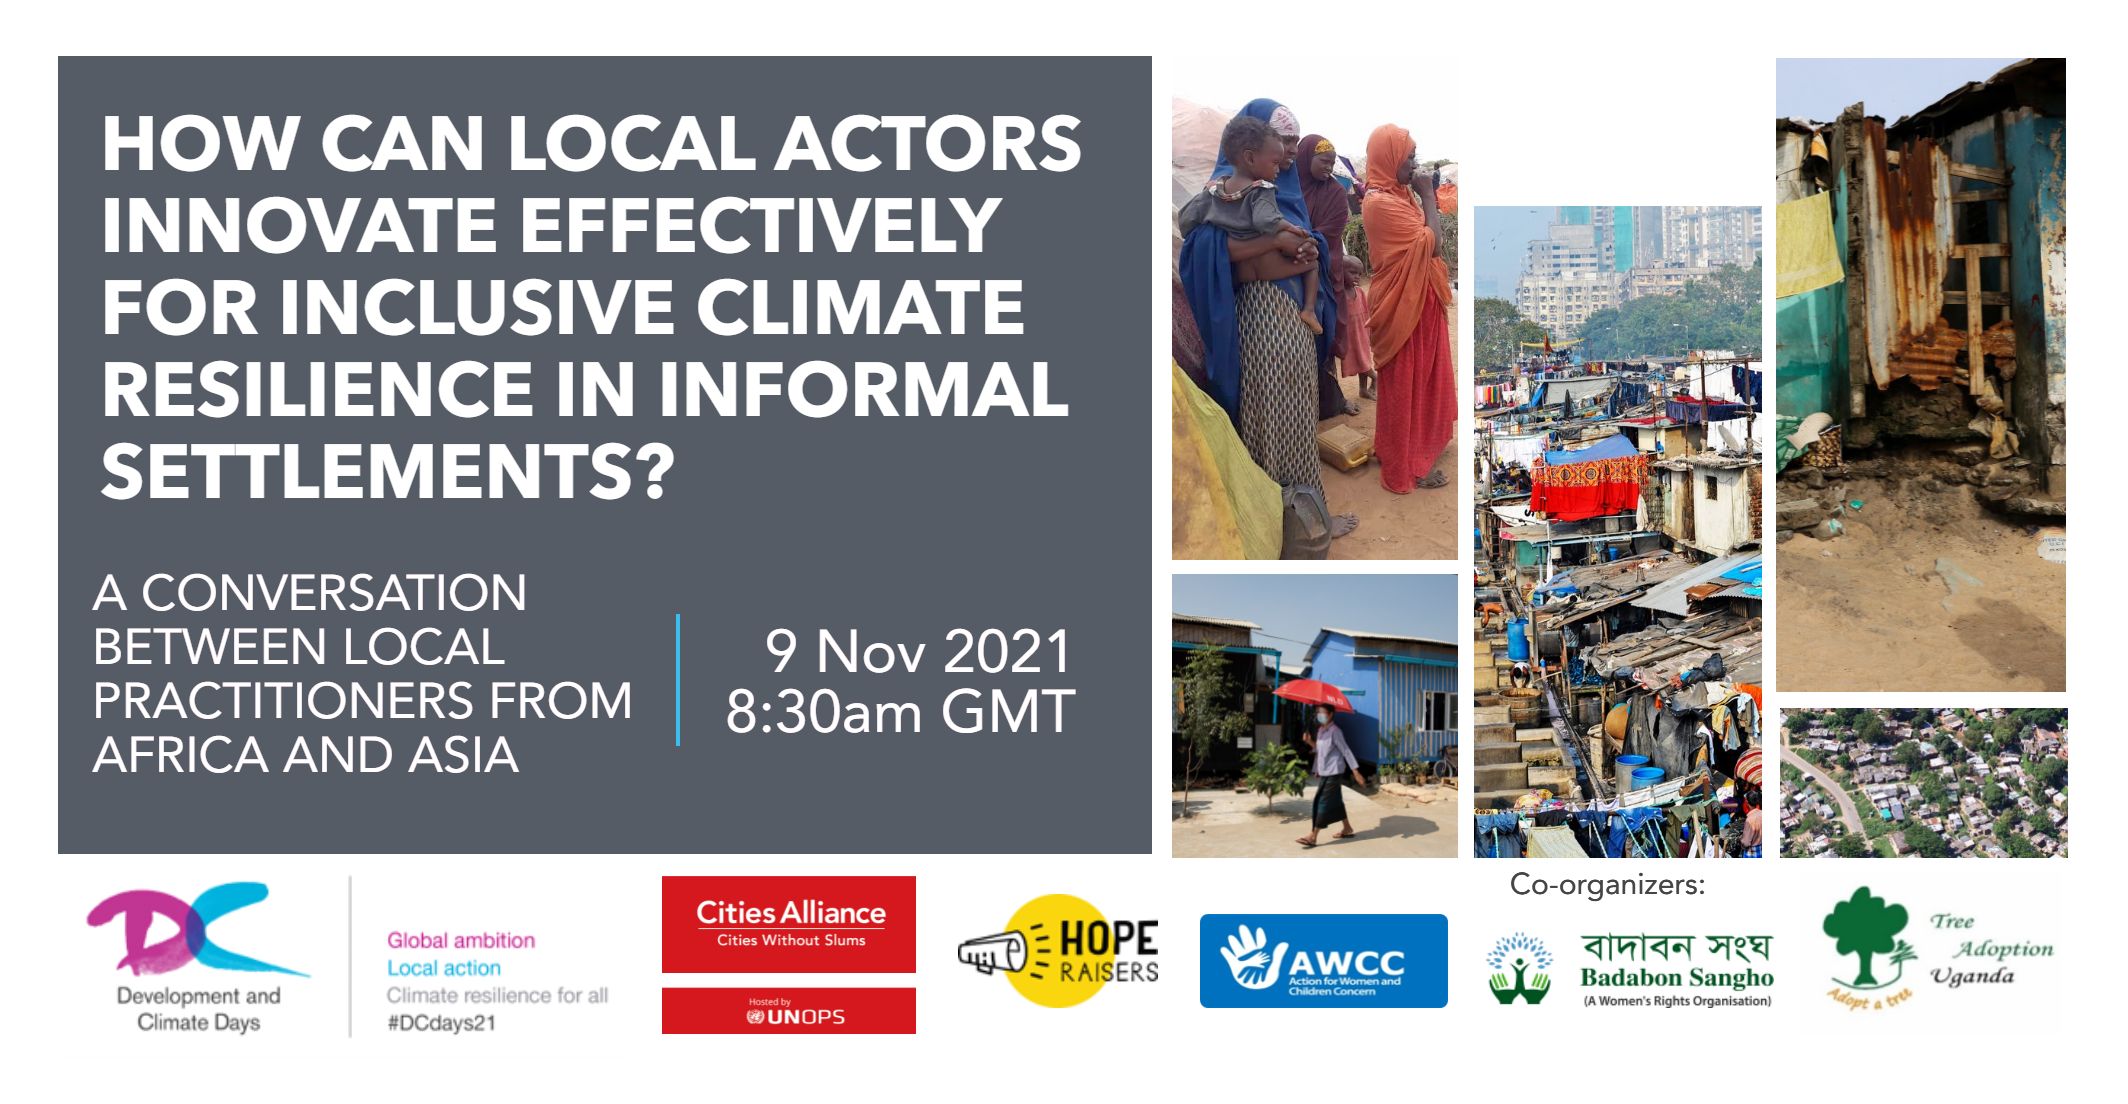 D&amp;C days Innovating for Climate Resilience in Informal Settlements flyer thumbnail